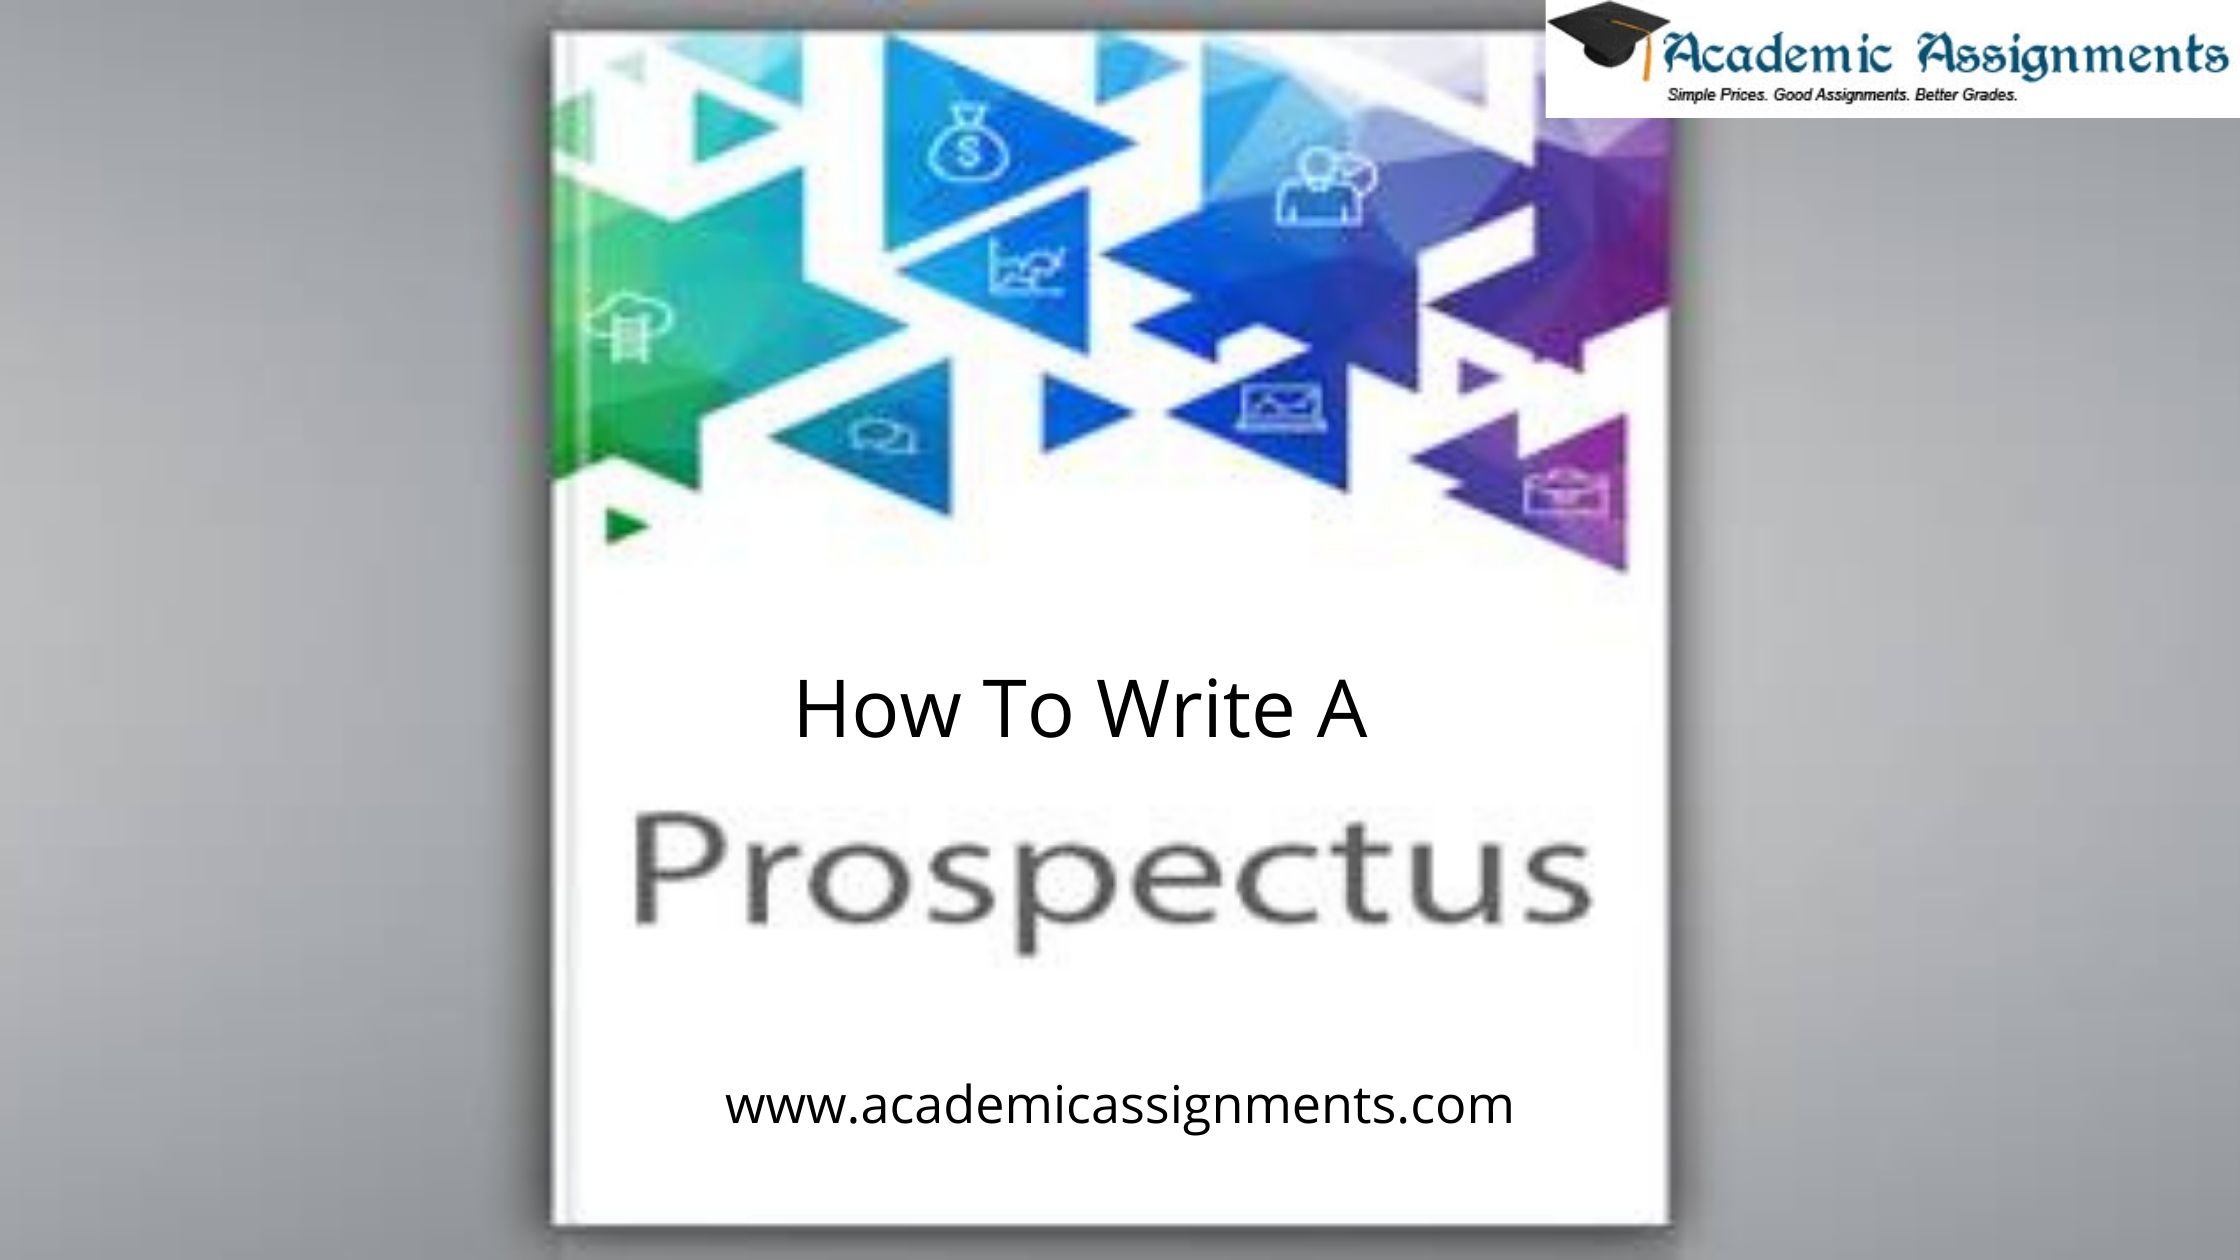 How To Write A Prospectus